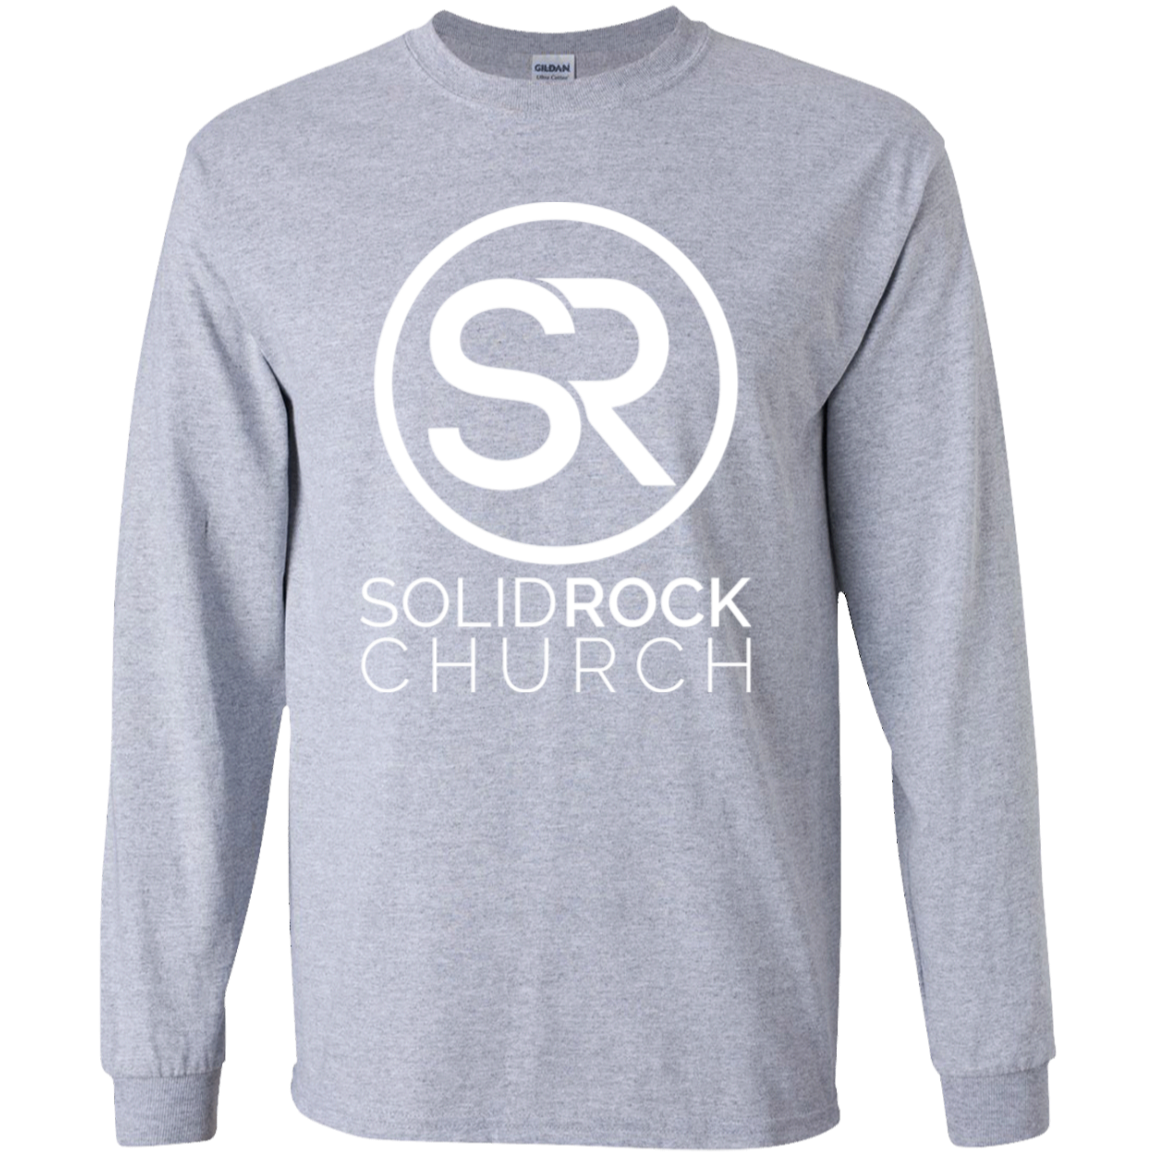 Solid Rock Church - LONG SLEEVES